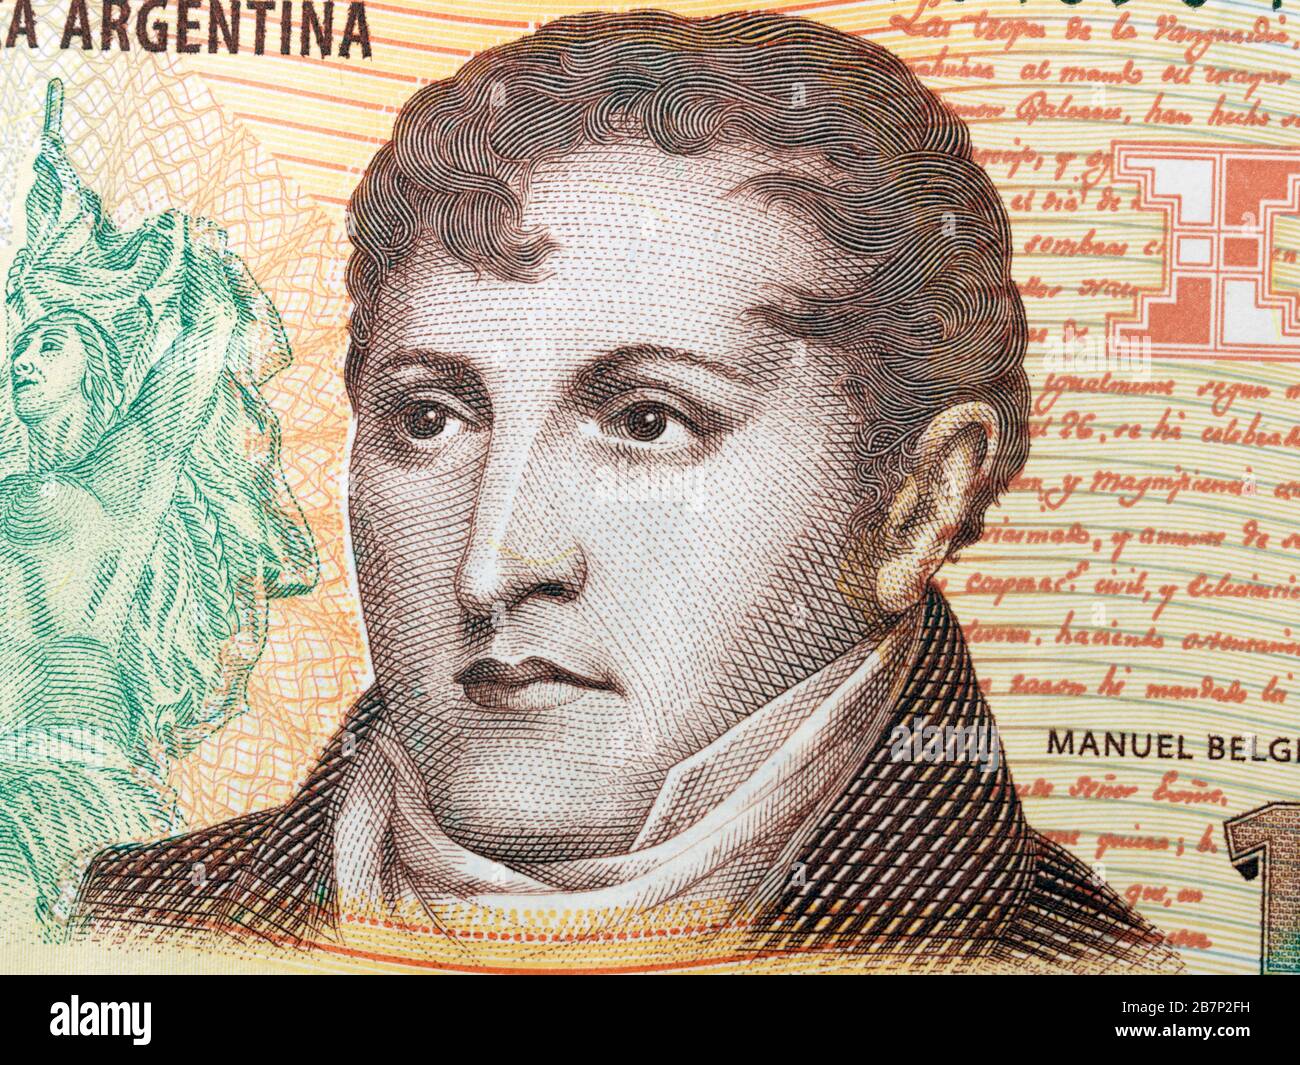 Banco De La Republica Argentina Ten Peso Banknote depicting Manuel Belgrano 1770-1820 Political Figure and Revolutionary General who created the Flag Stock Photo